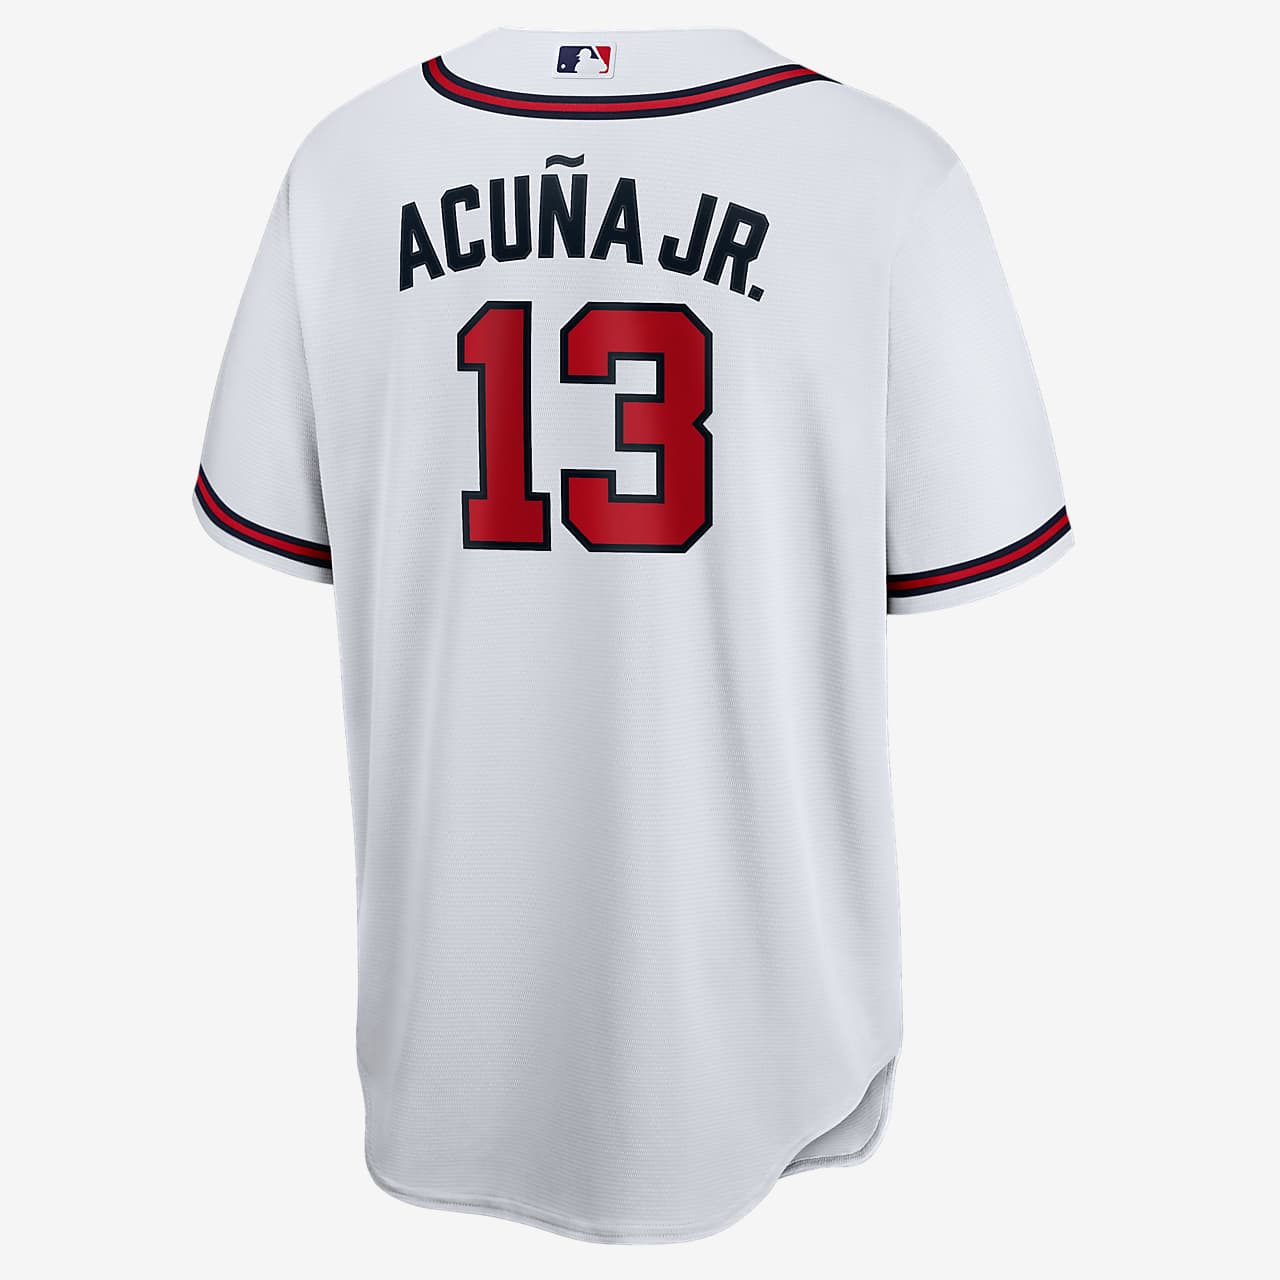 Atlanta Braves Major League Baseball MLB Baseball Jersey Shirt